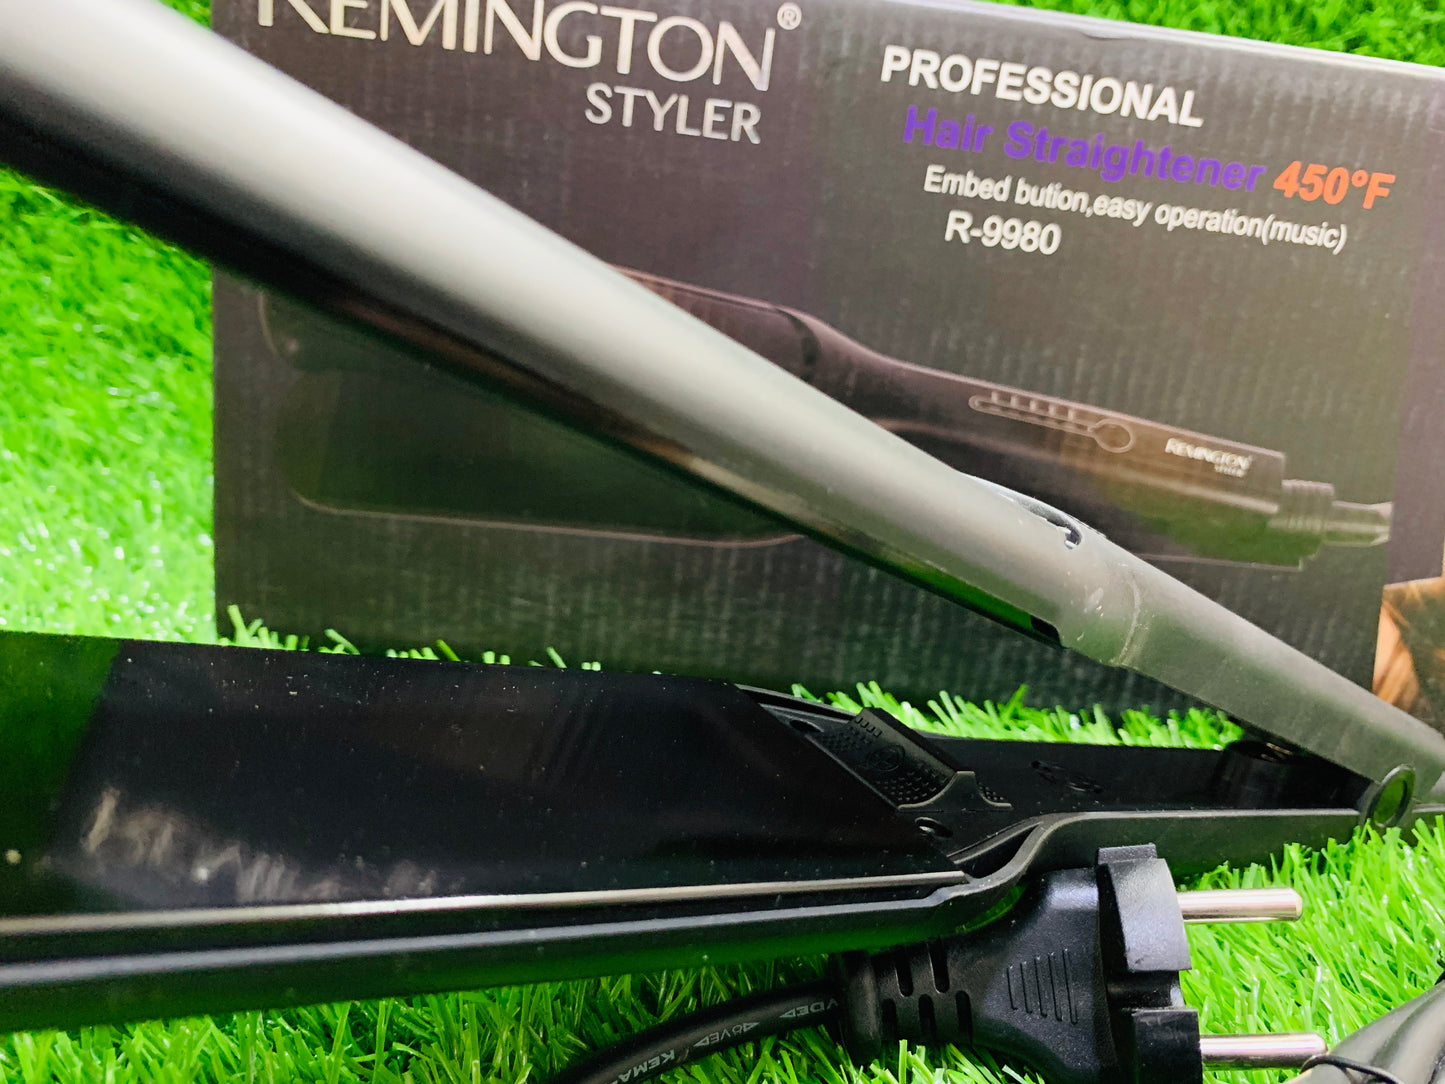 Remington professional hair styler R-9980 450F